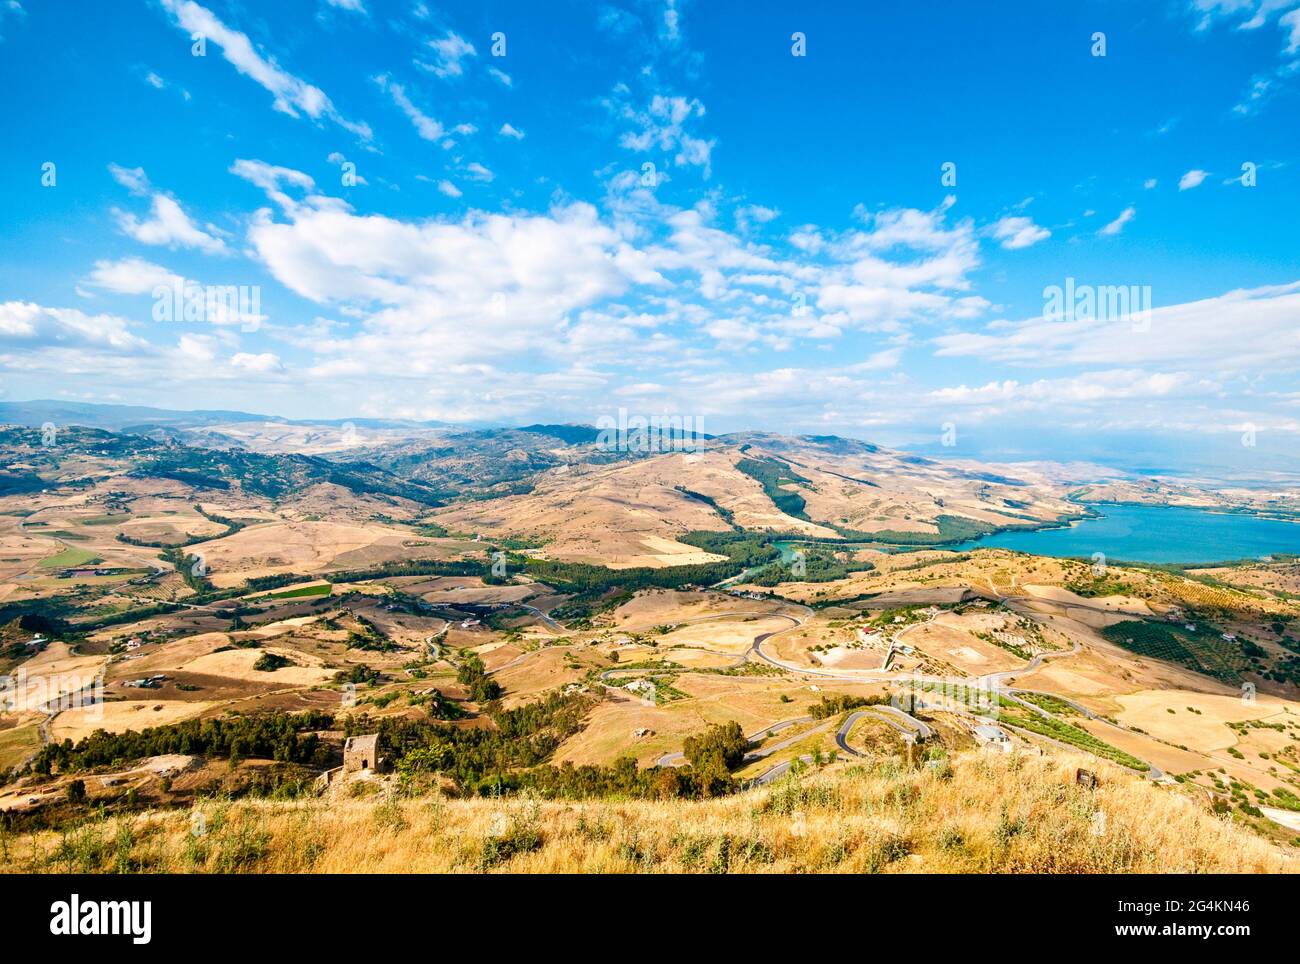 view from Sicily Enna Agira northward with Lake Pozzillo on right, Sicily, Italy, Europe Stock Photo